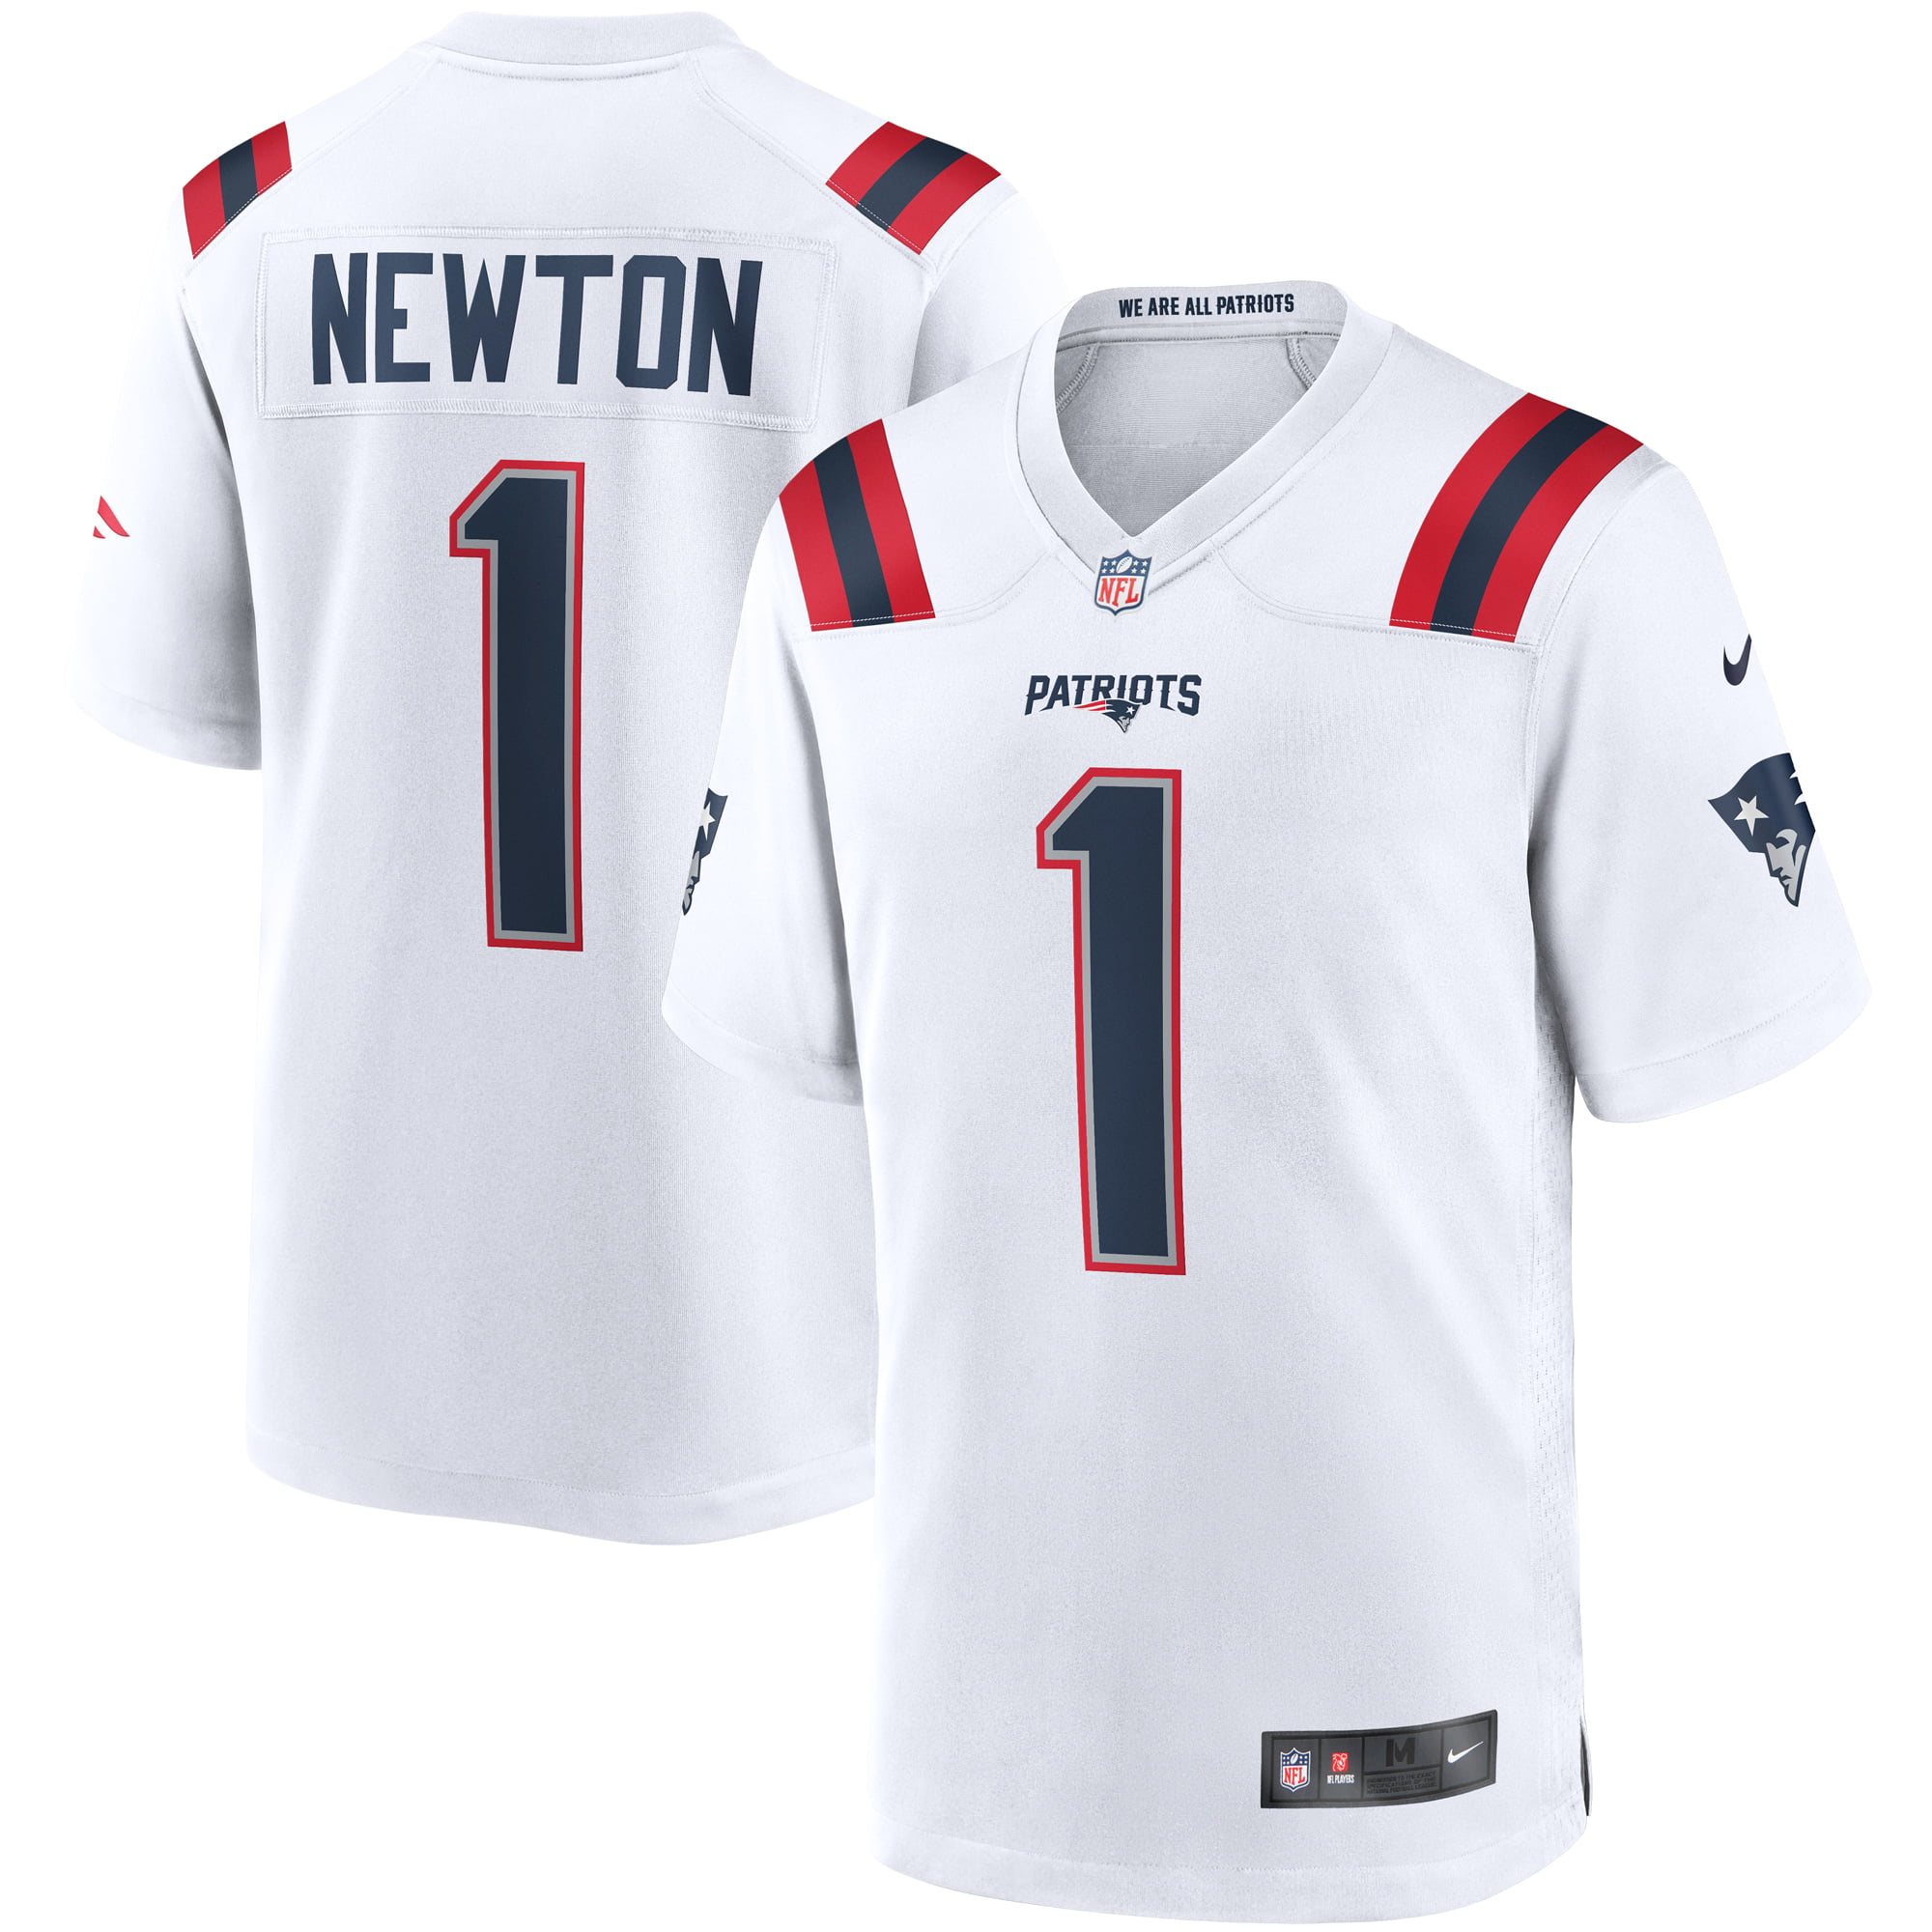 cam newton in patriots jersey